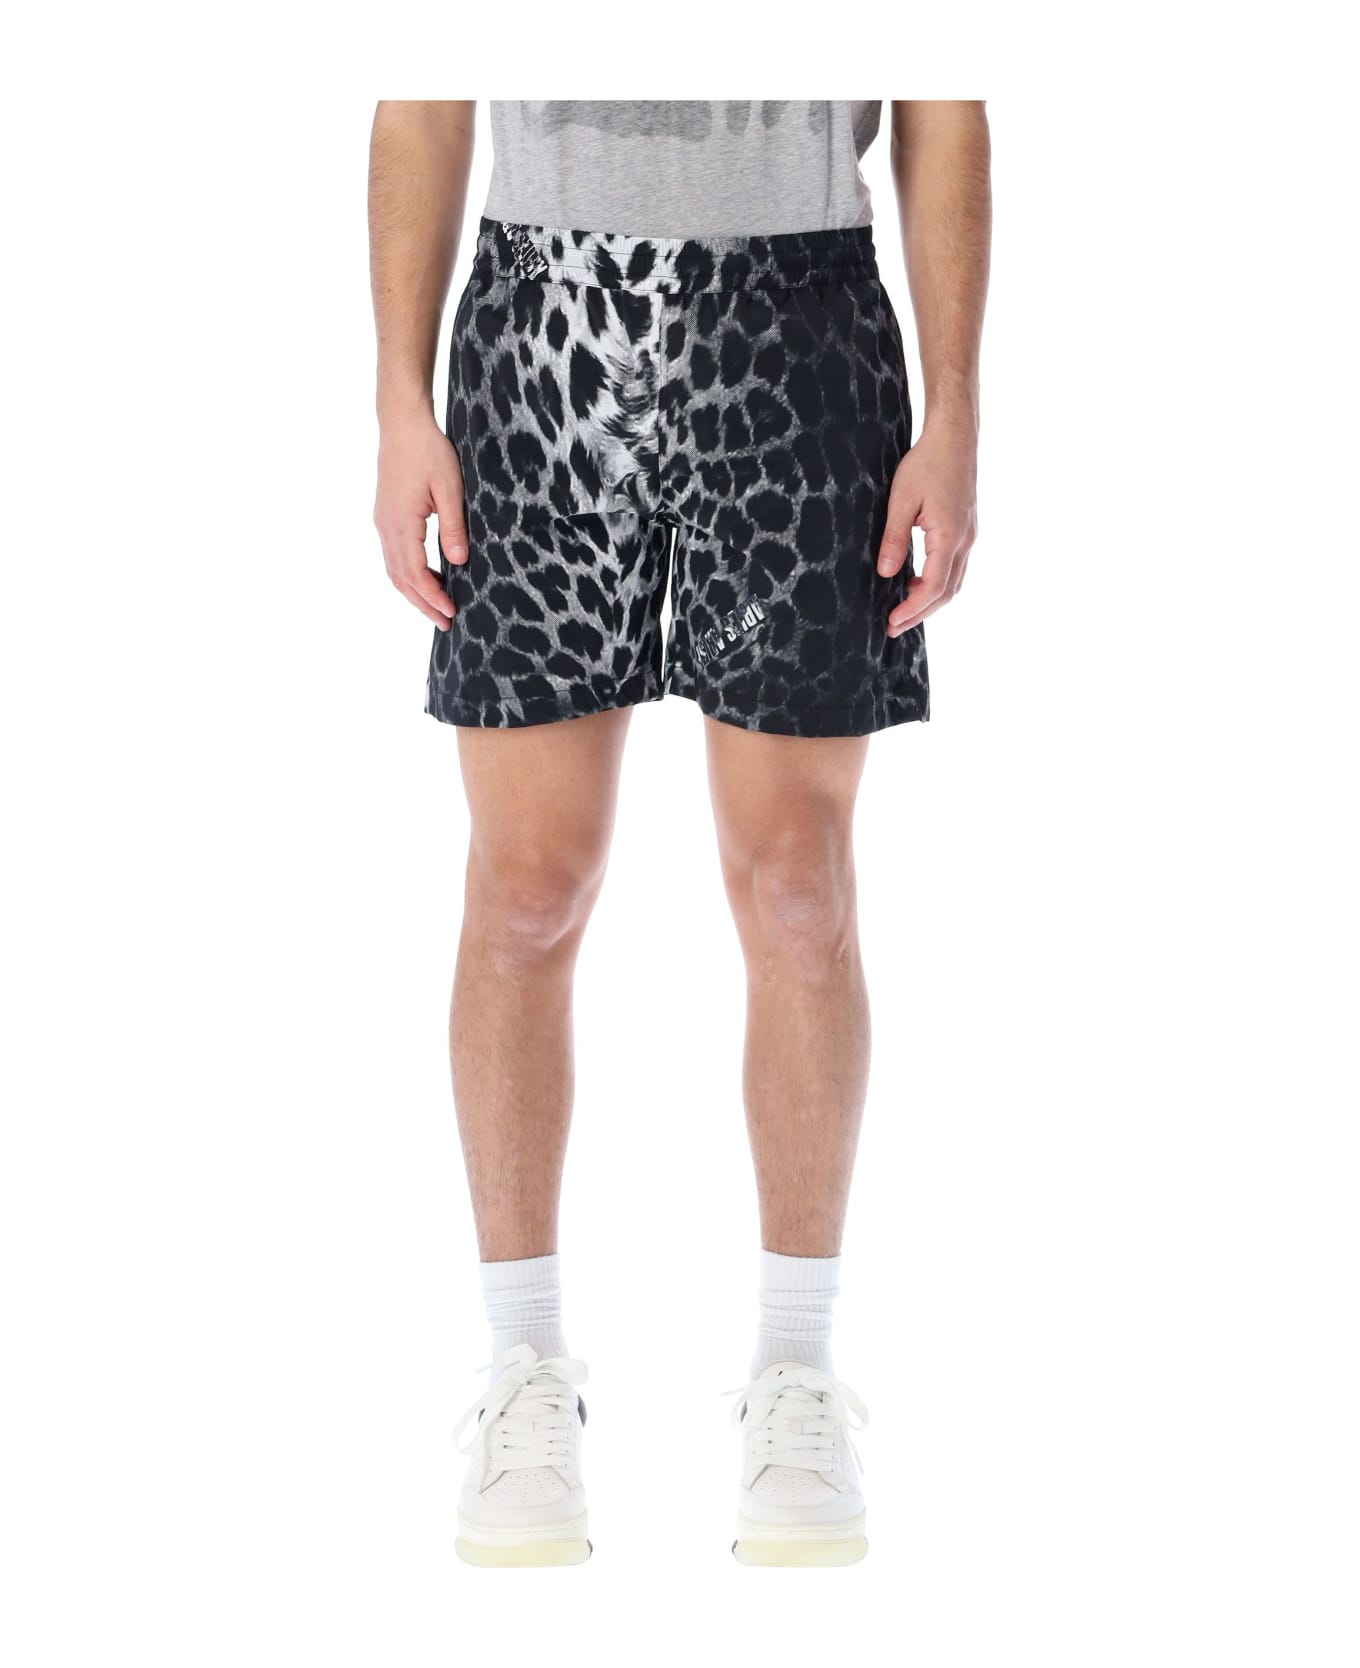 Aries Leopard Board Short - BLACK WHITE